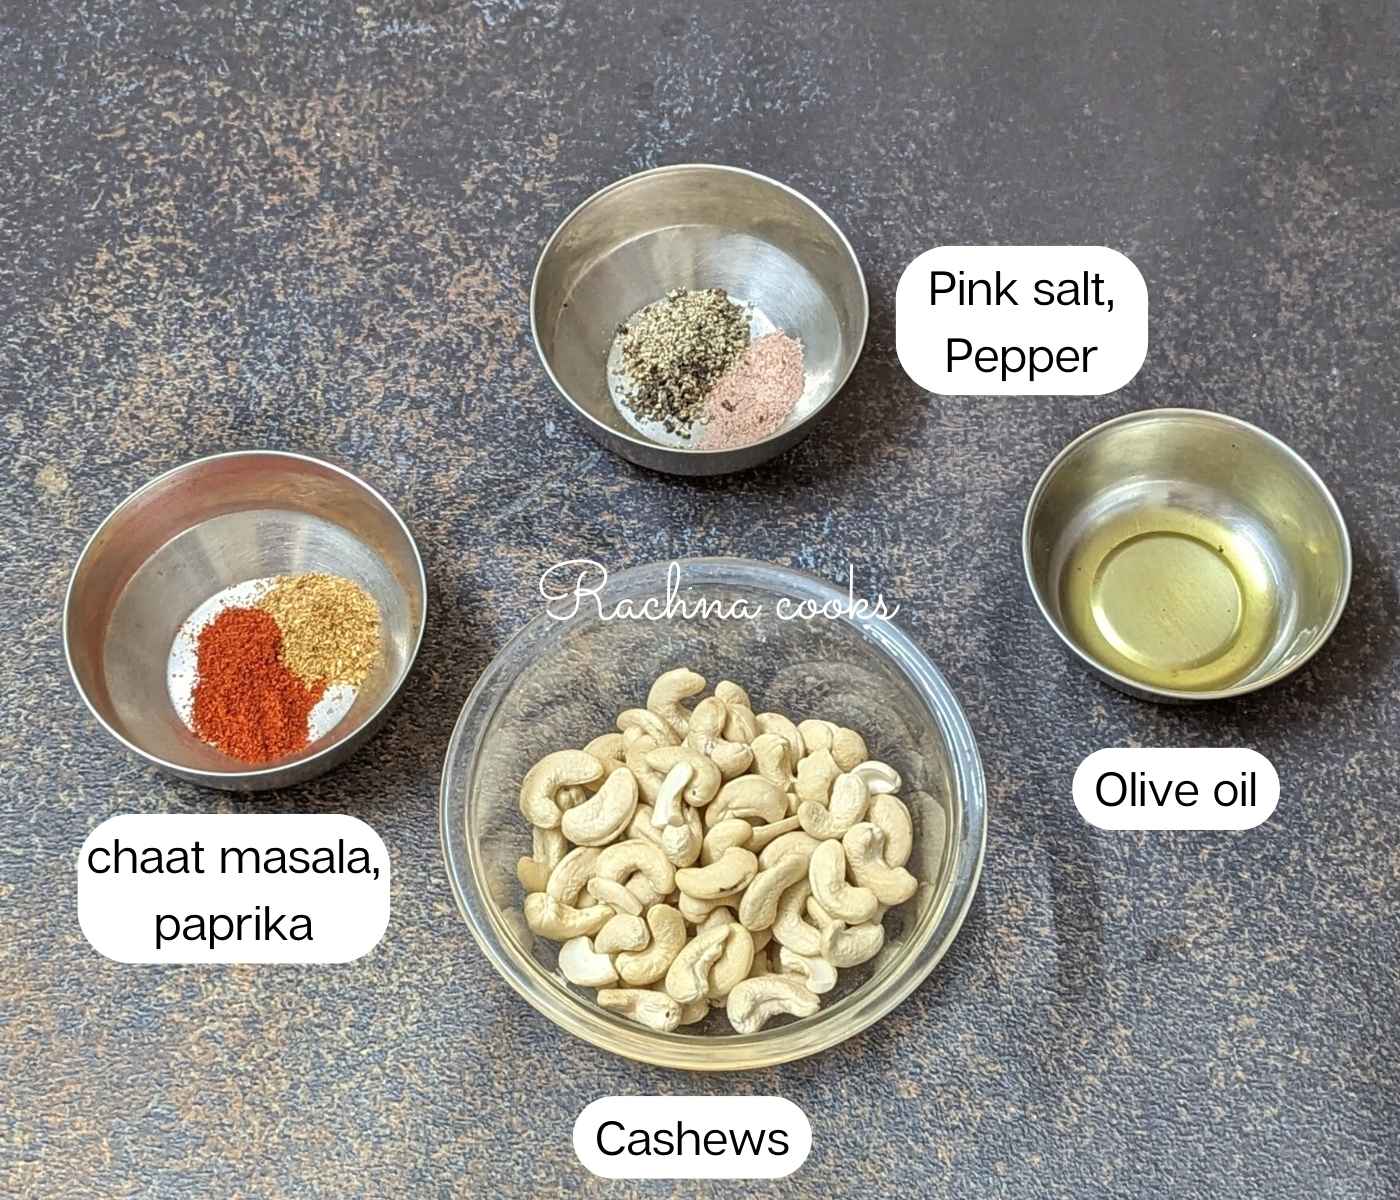 Ingredients for making roasted cashews in air fryer. seasonings, oil and cashews in bowls.